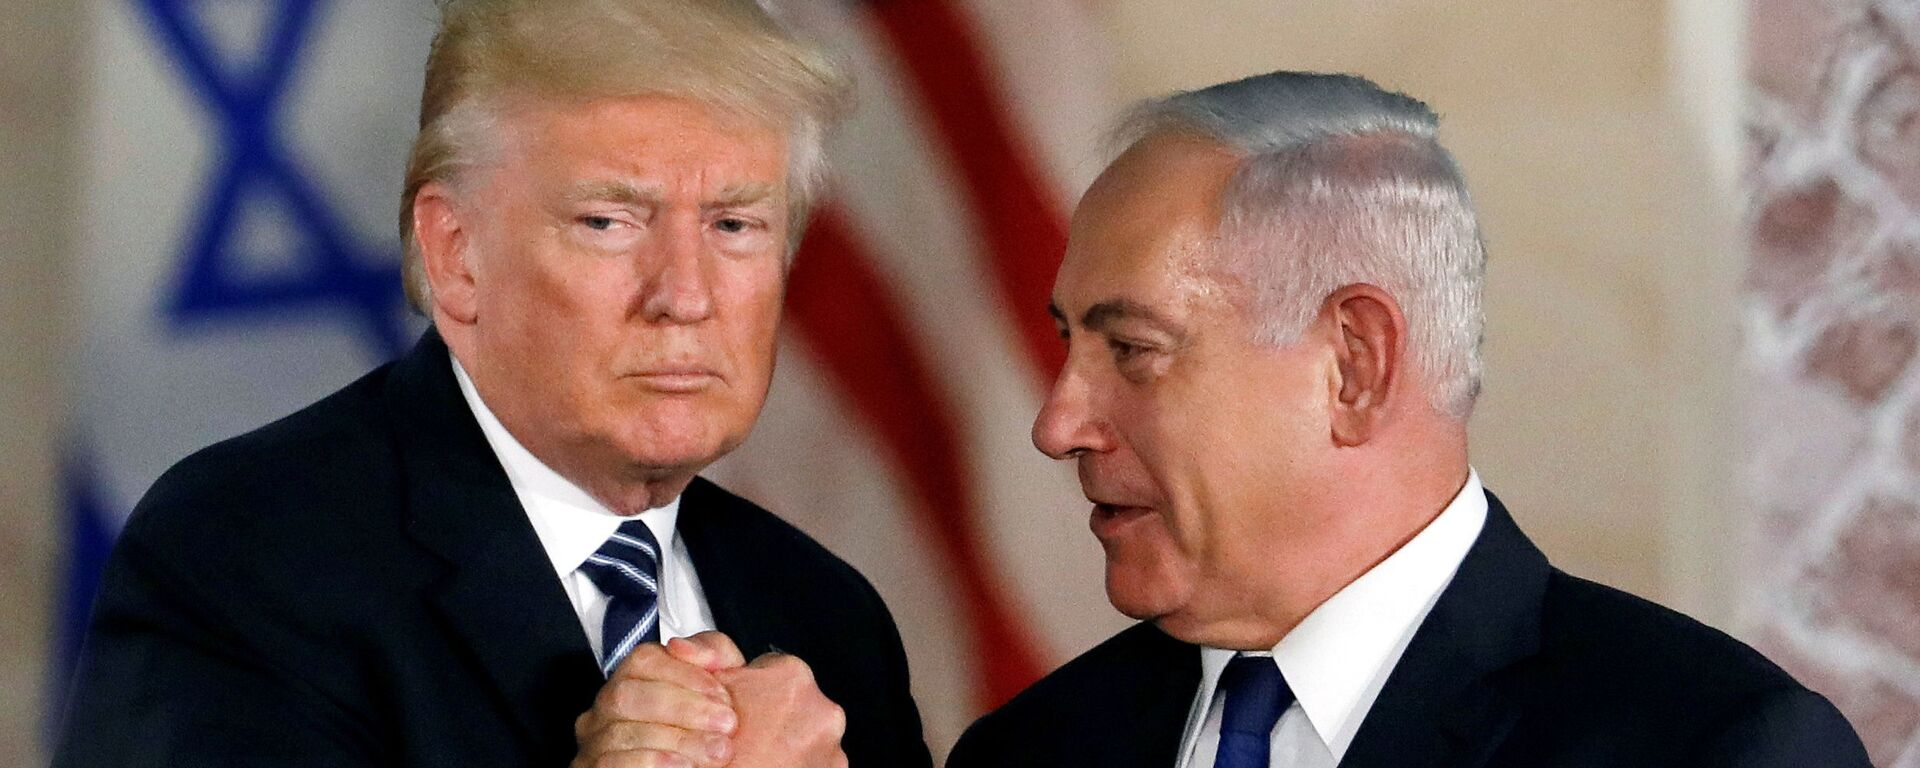 U.S. President Donald Trump and Israeli Prime Minister Benjamin Netanyahu shake hands after Trump's address at the Israel Museum in Jerusalem May 23, 2017. - Sputnik International, 1920, 01.11.2021